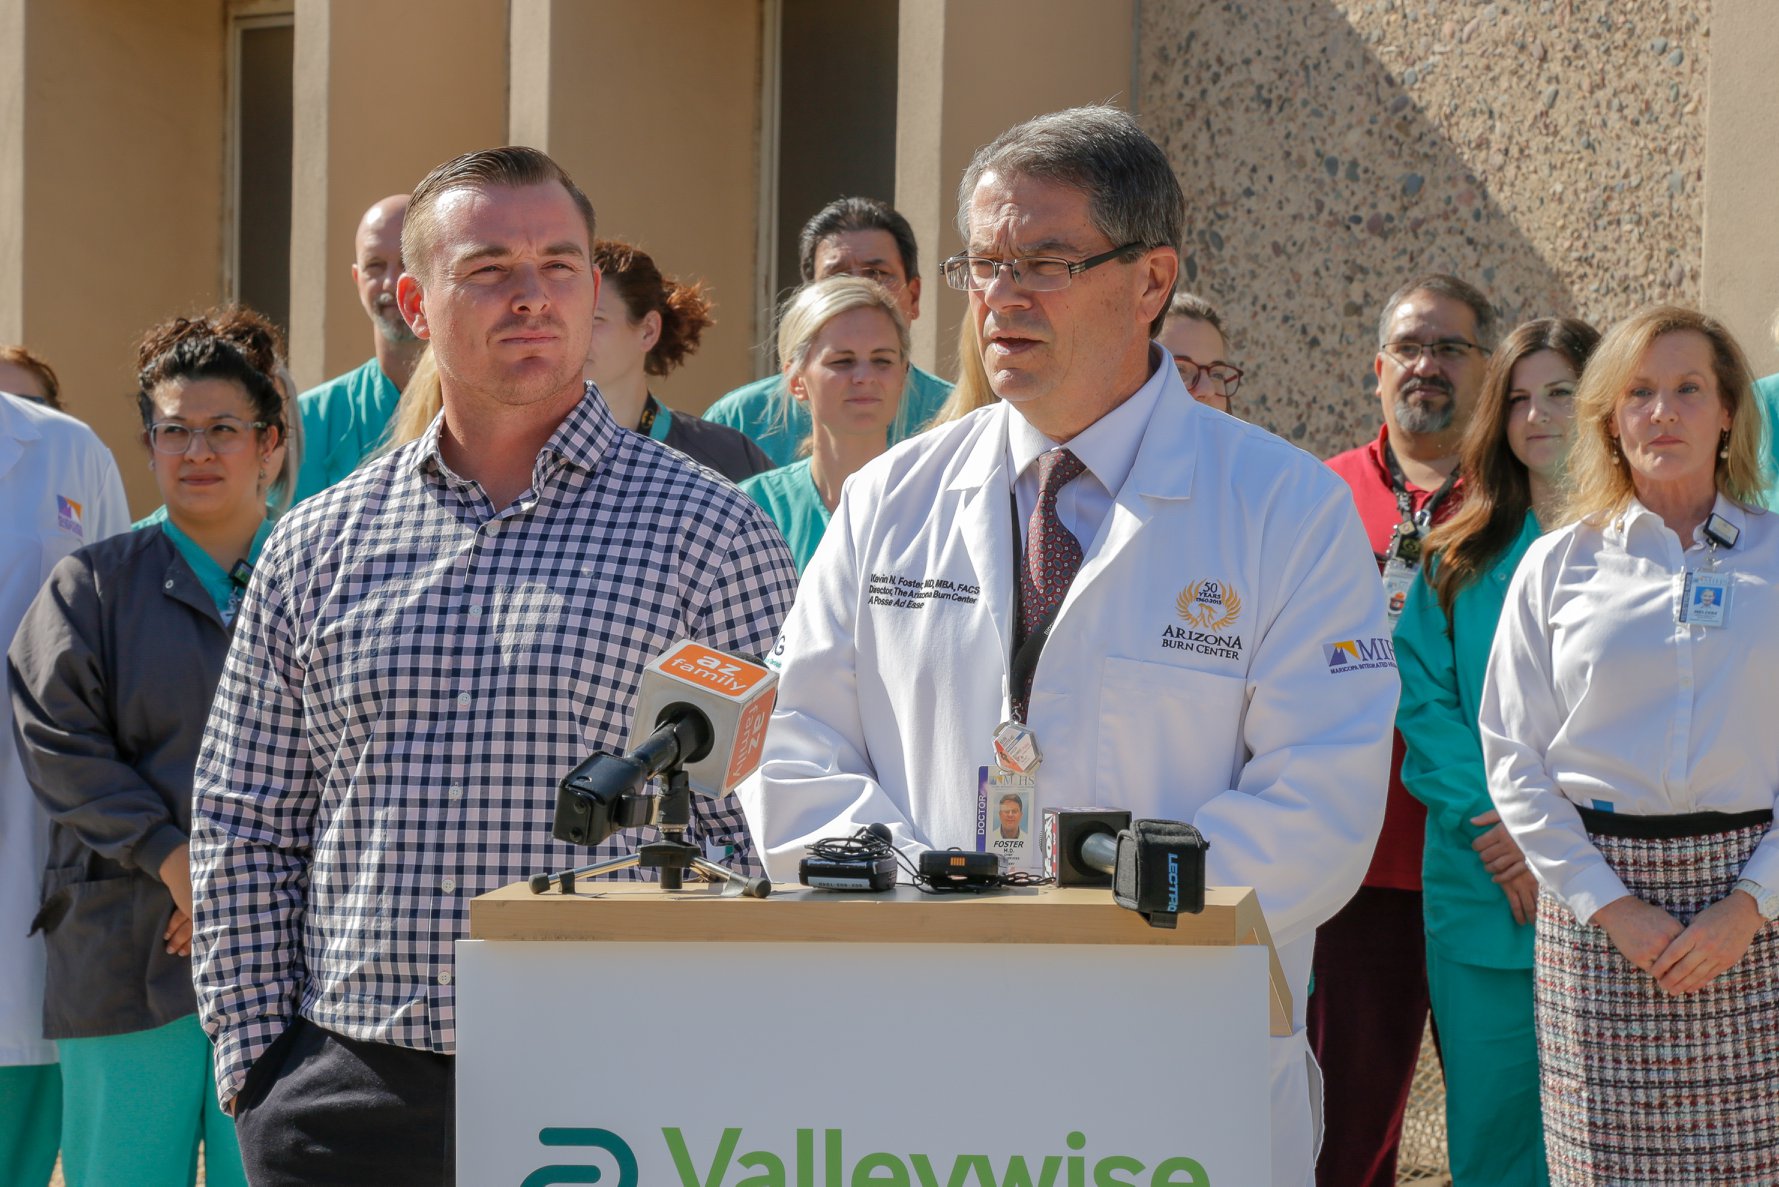 Phoenix AZ area business Valleywise Health